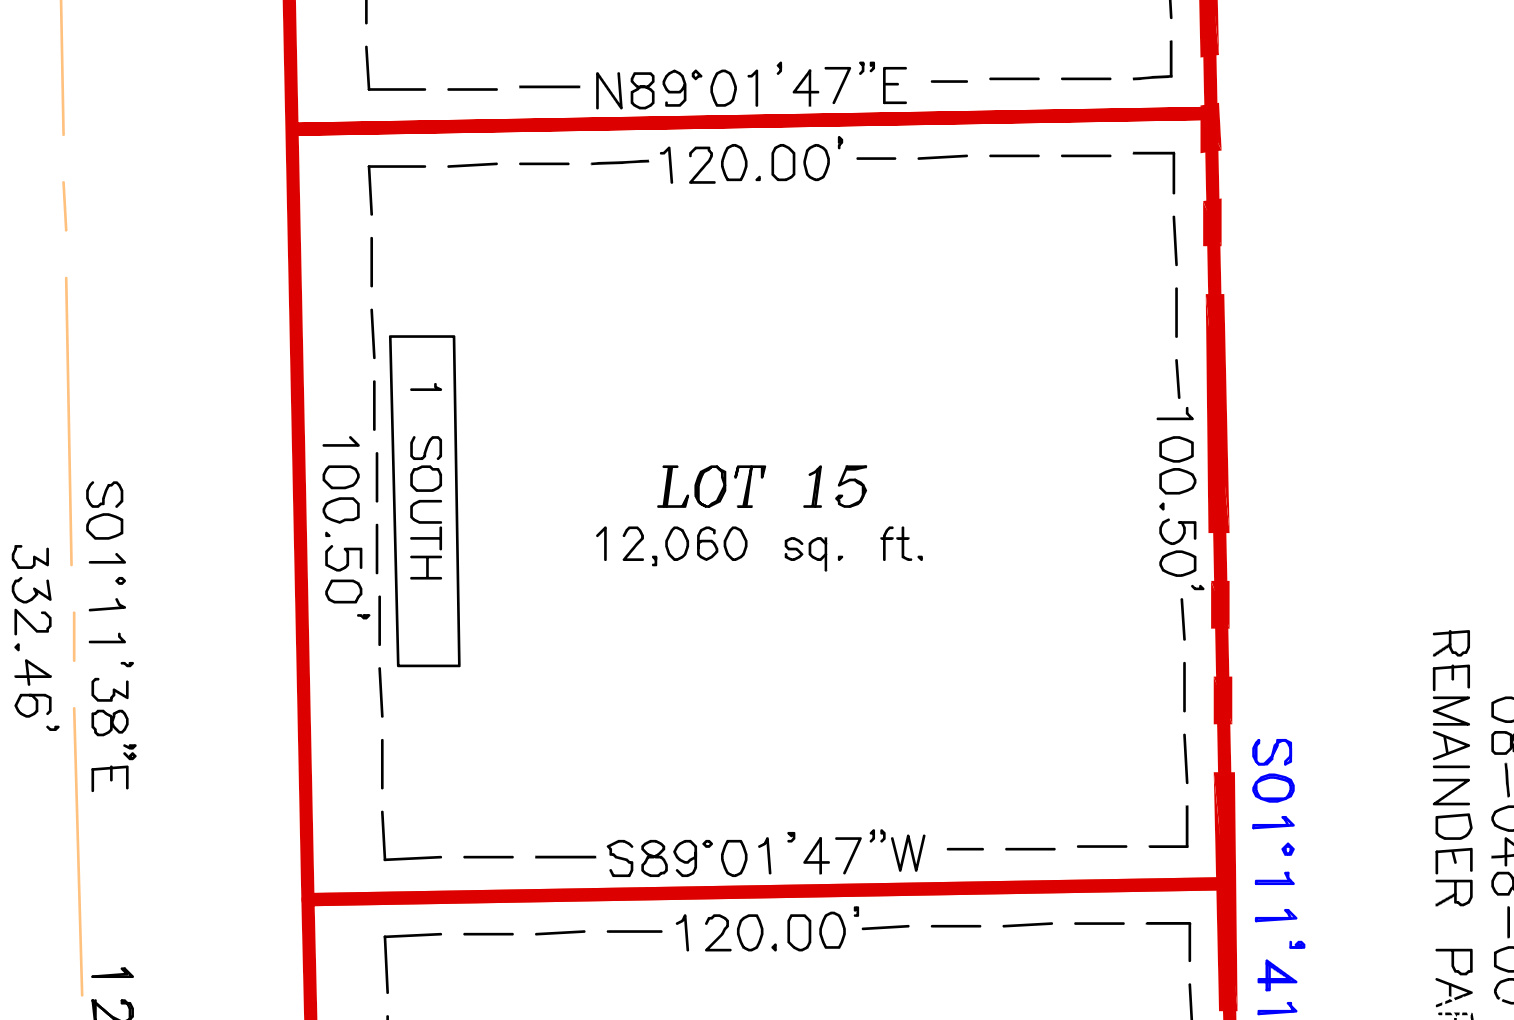 1 S 1200 E #15, Smithfield, Utah 84335, ,Land,For sale,1200,1892802